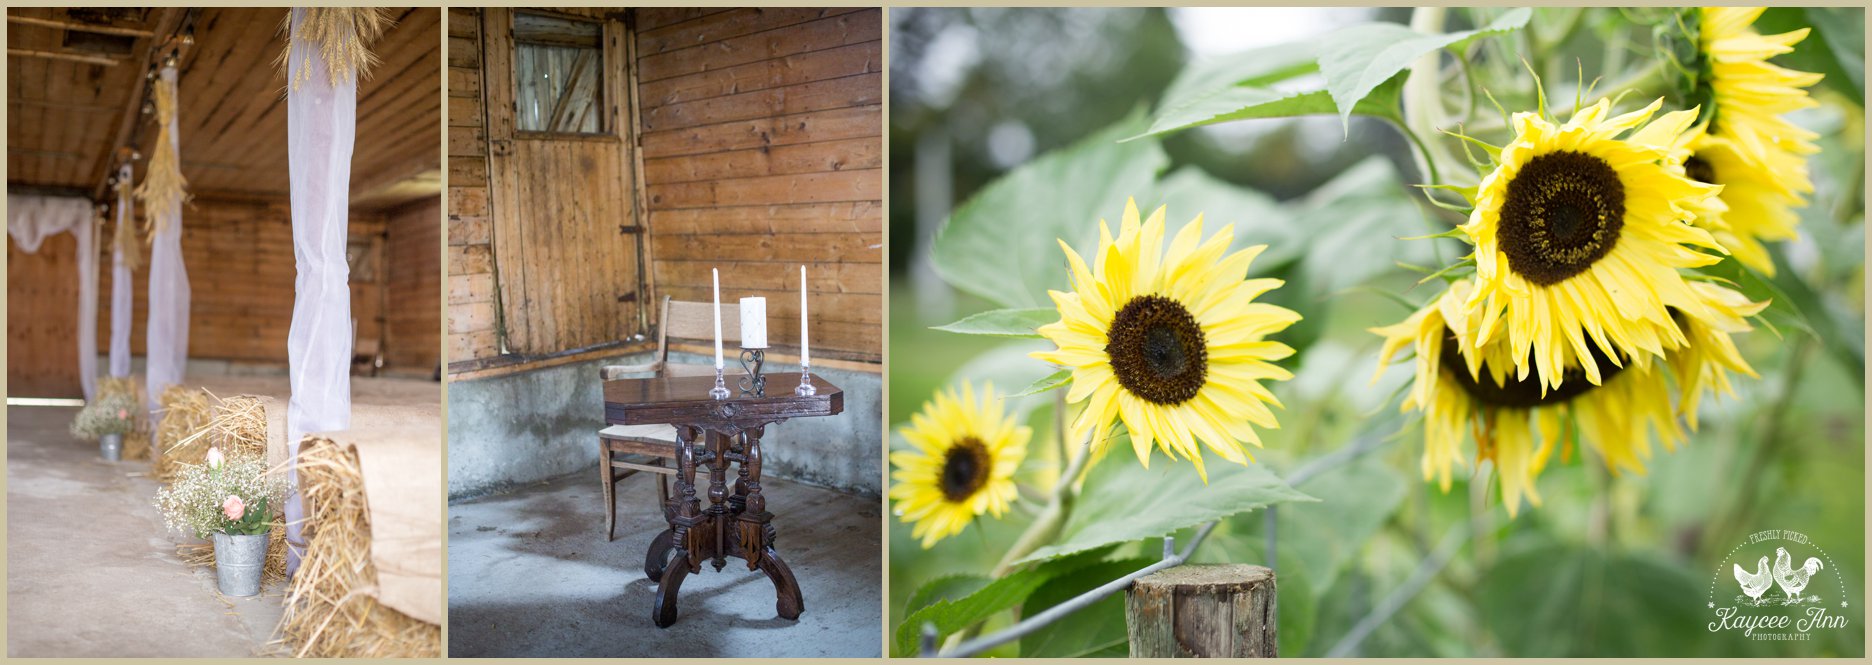 sunflower, wedding agreement, candle, bible, garden, outdoor barn wedding, alberta wedding photographer